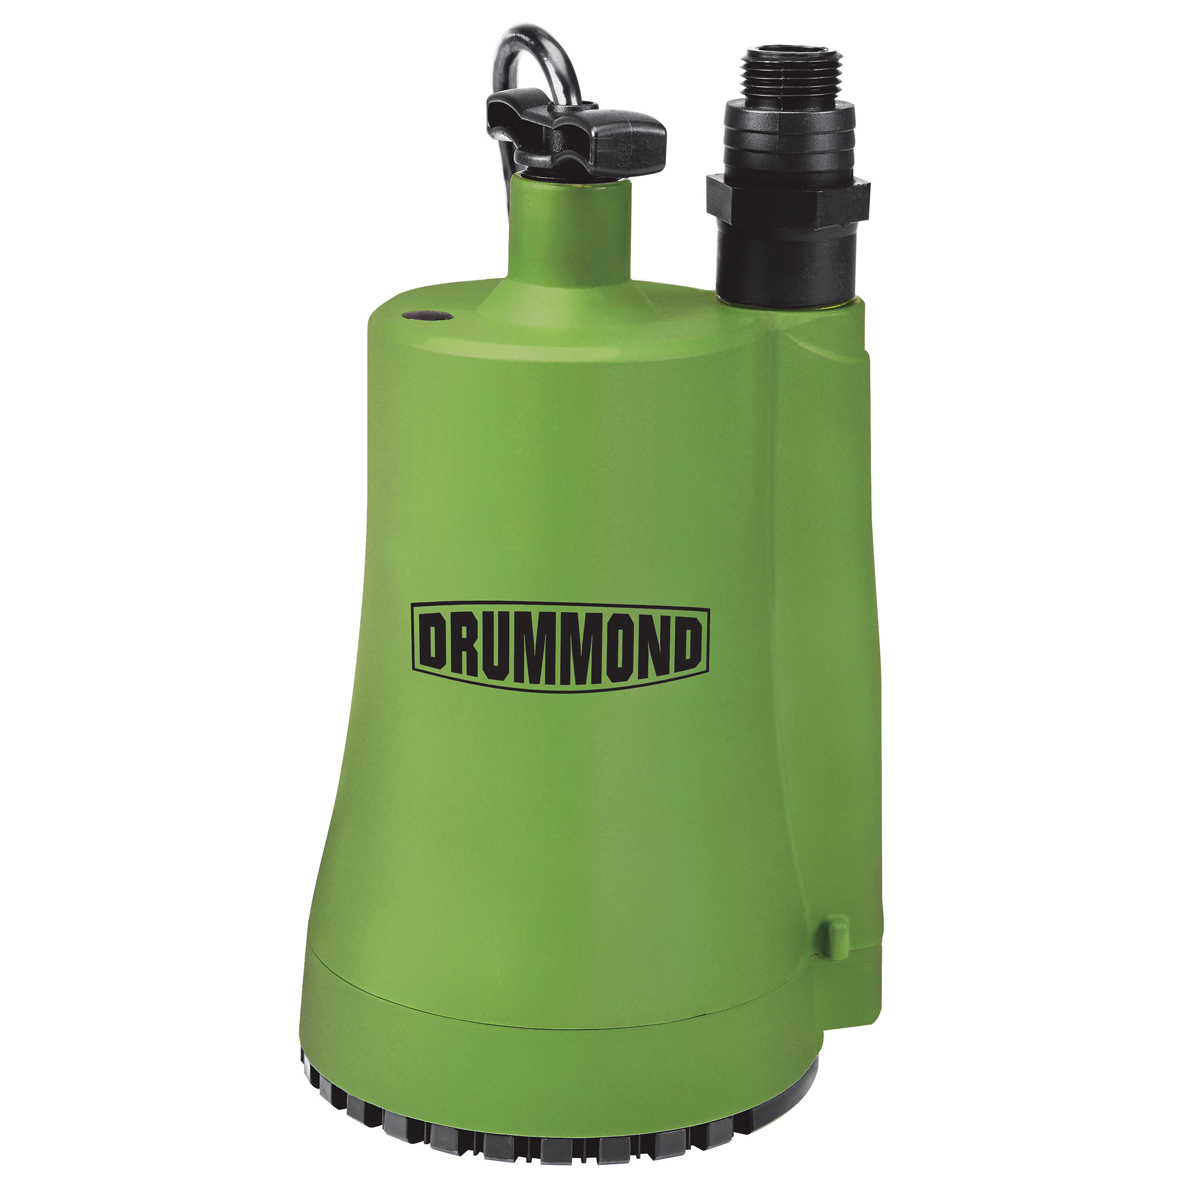 DRUMMOND 1/3 HP Submersible Utility Pump 2000 GPH – Item 63318 / 56362